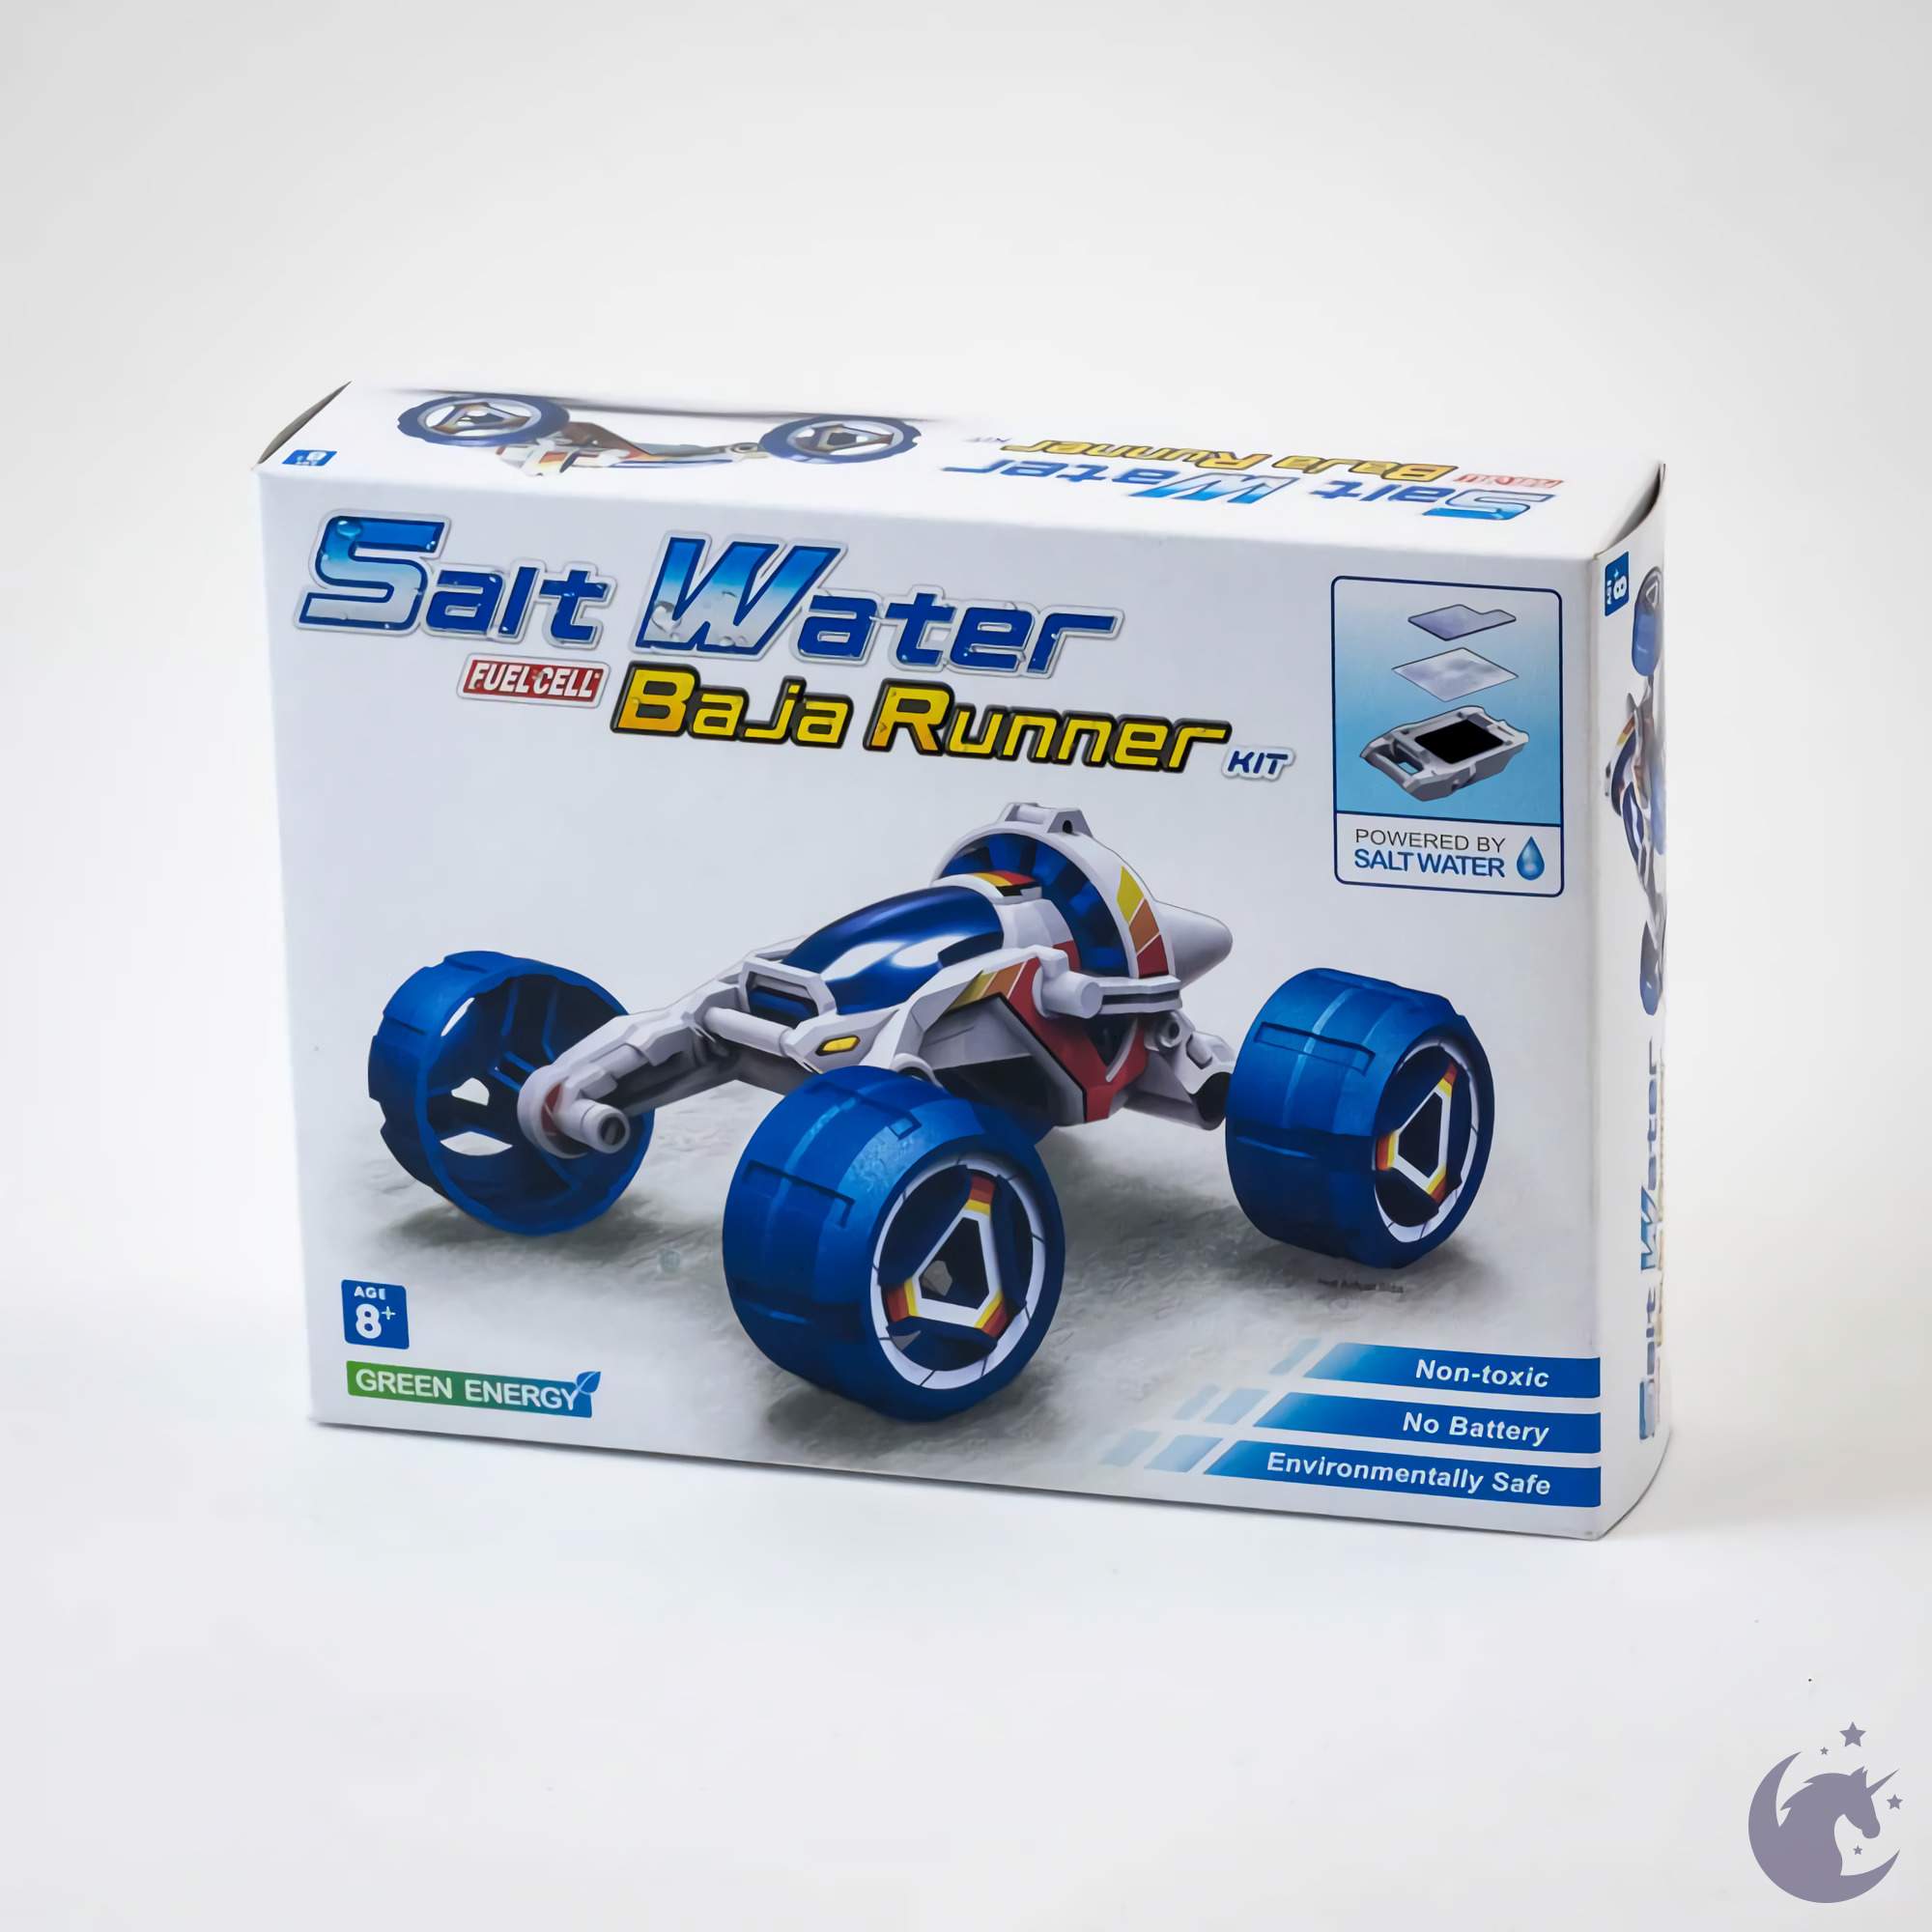 unicorntoys cic kits salt water fuel cell engine baja runner educational robot kit engineering stem toys for kids CIC21-754